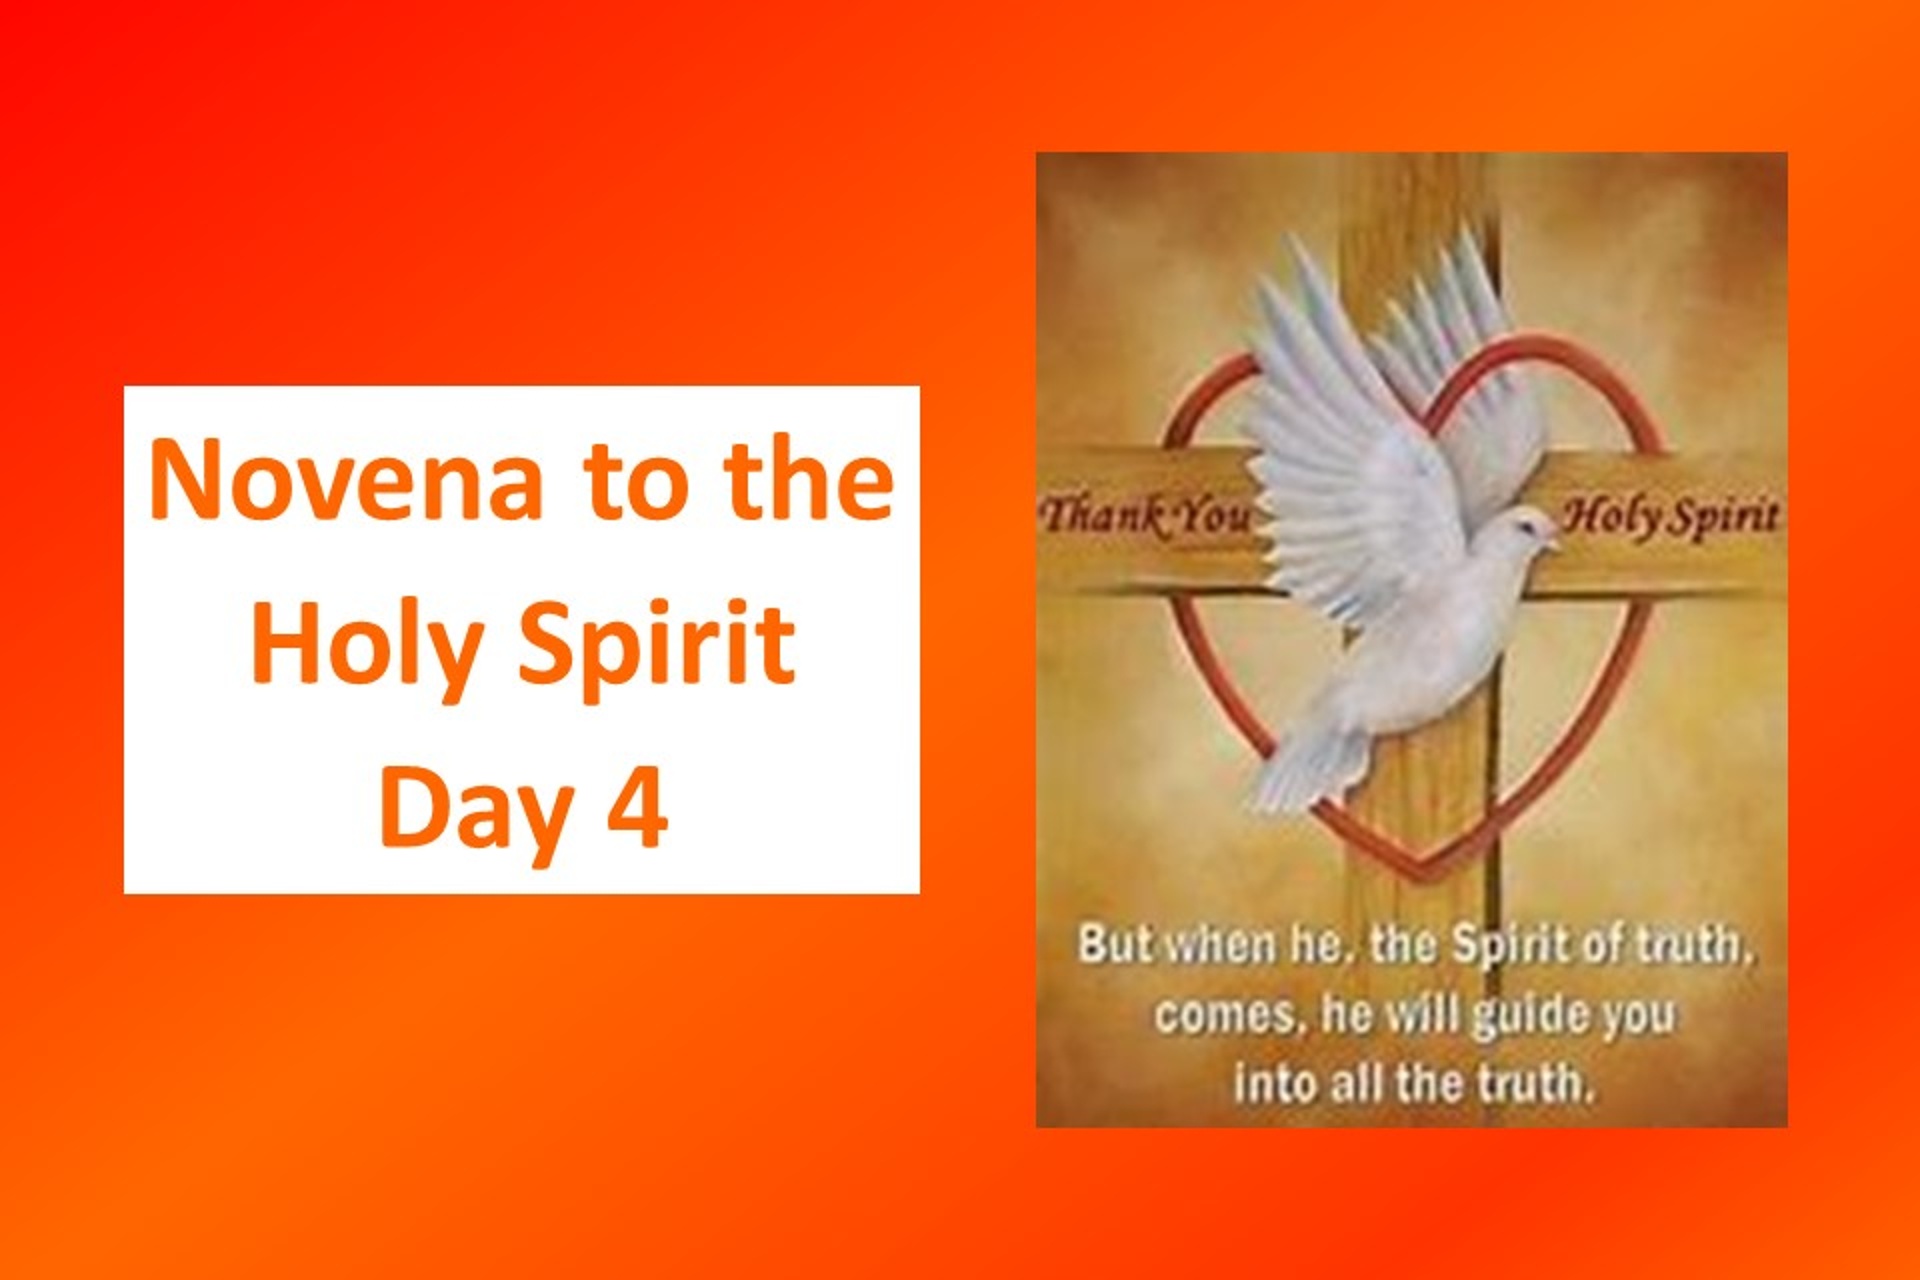 Novena to the Holy Spirit - Day 4